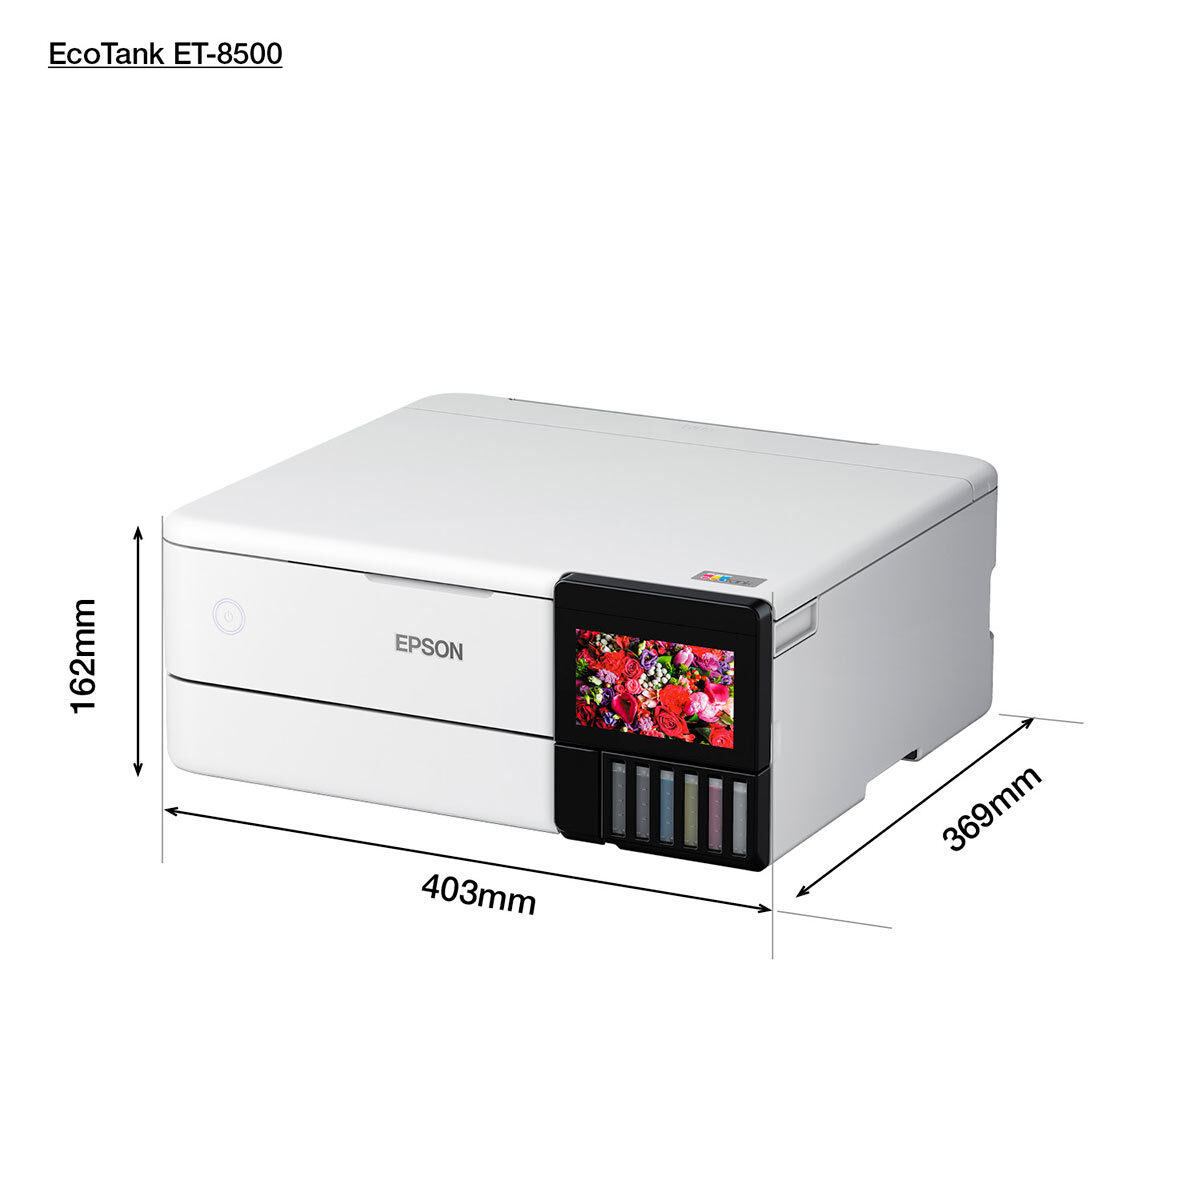 Buy Epson EcoTank ET-8500 Features5 Image at Costco.co.uk